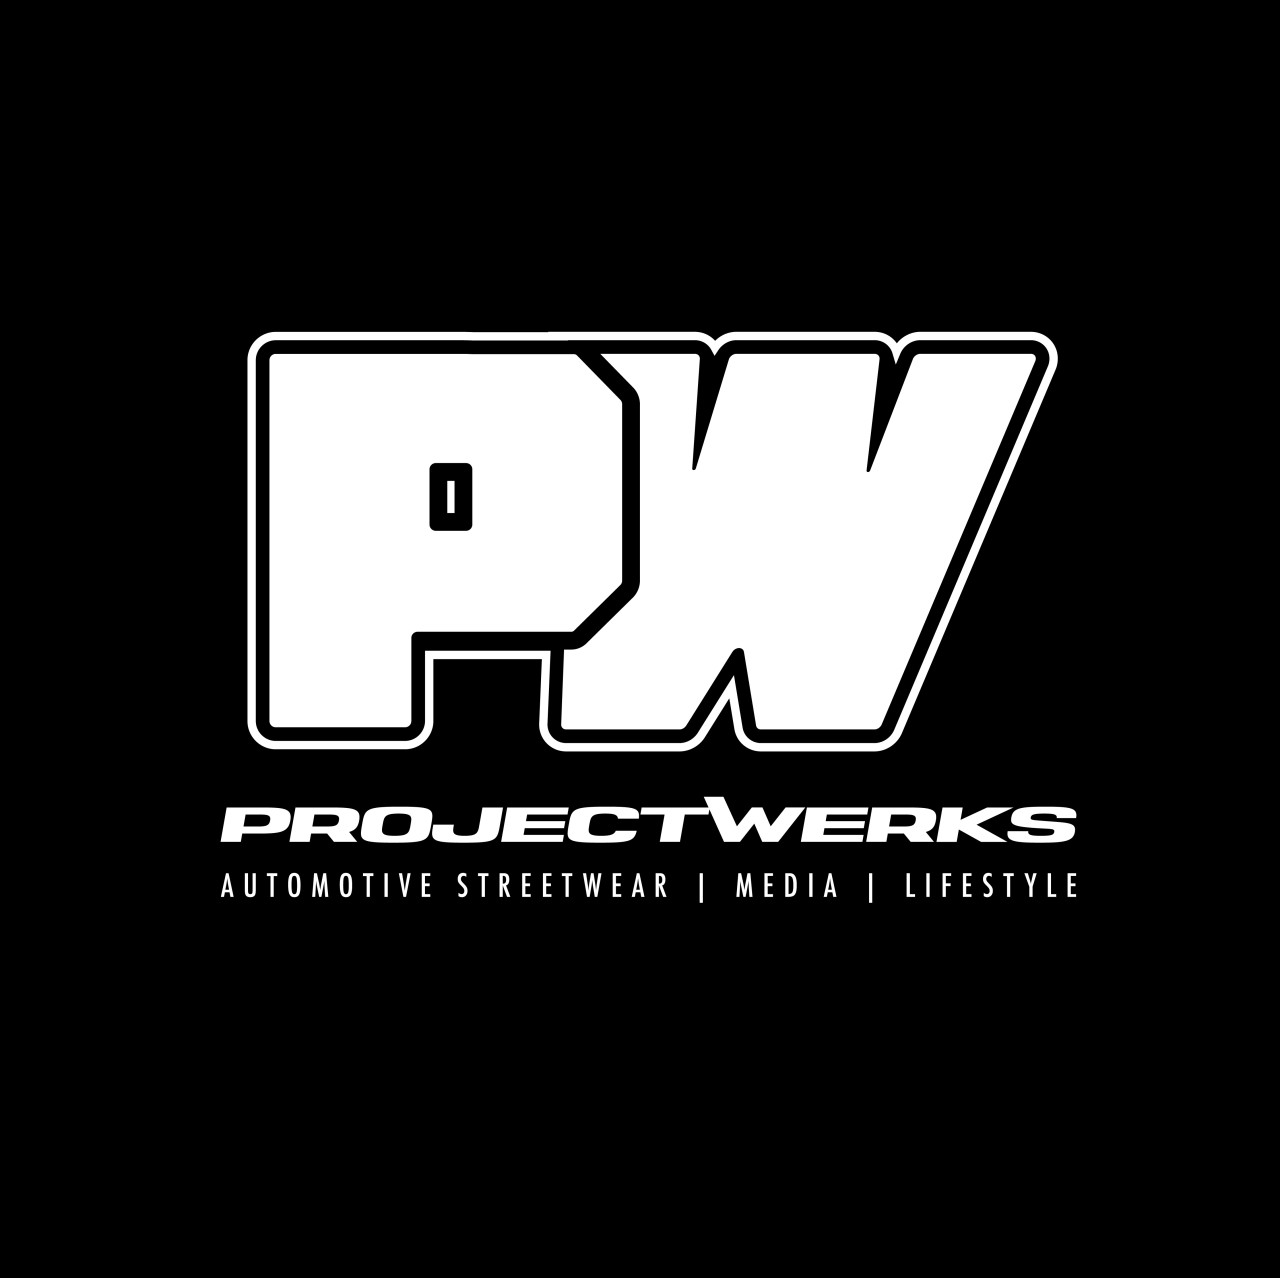 ProjectWerks